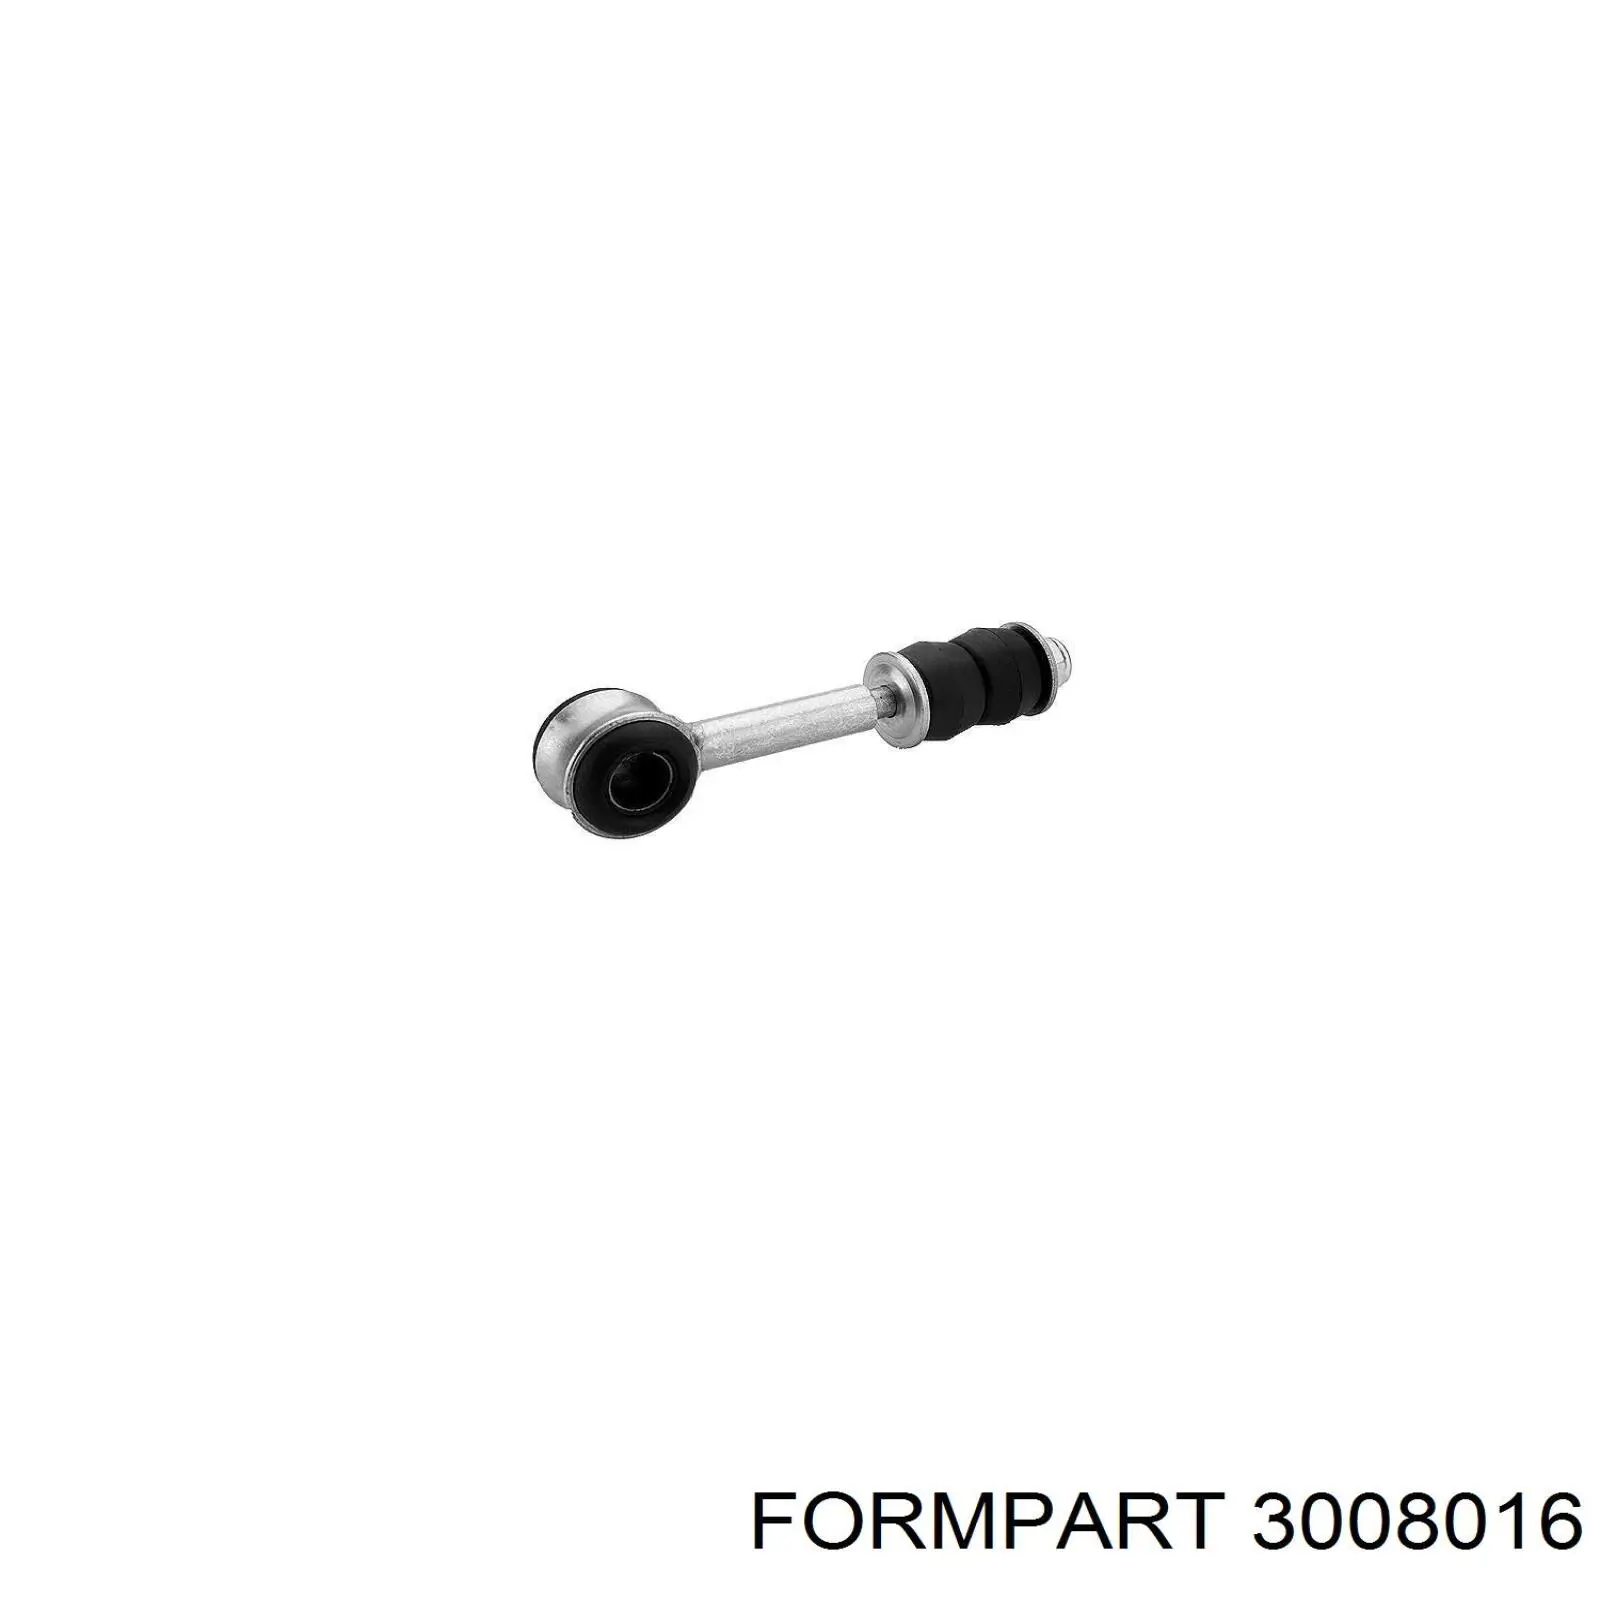 3008016 Formpart/Otoform soporte de barra estabilizadora delantera